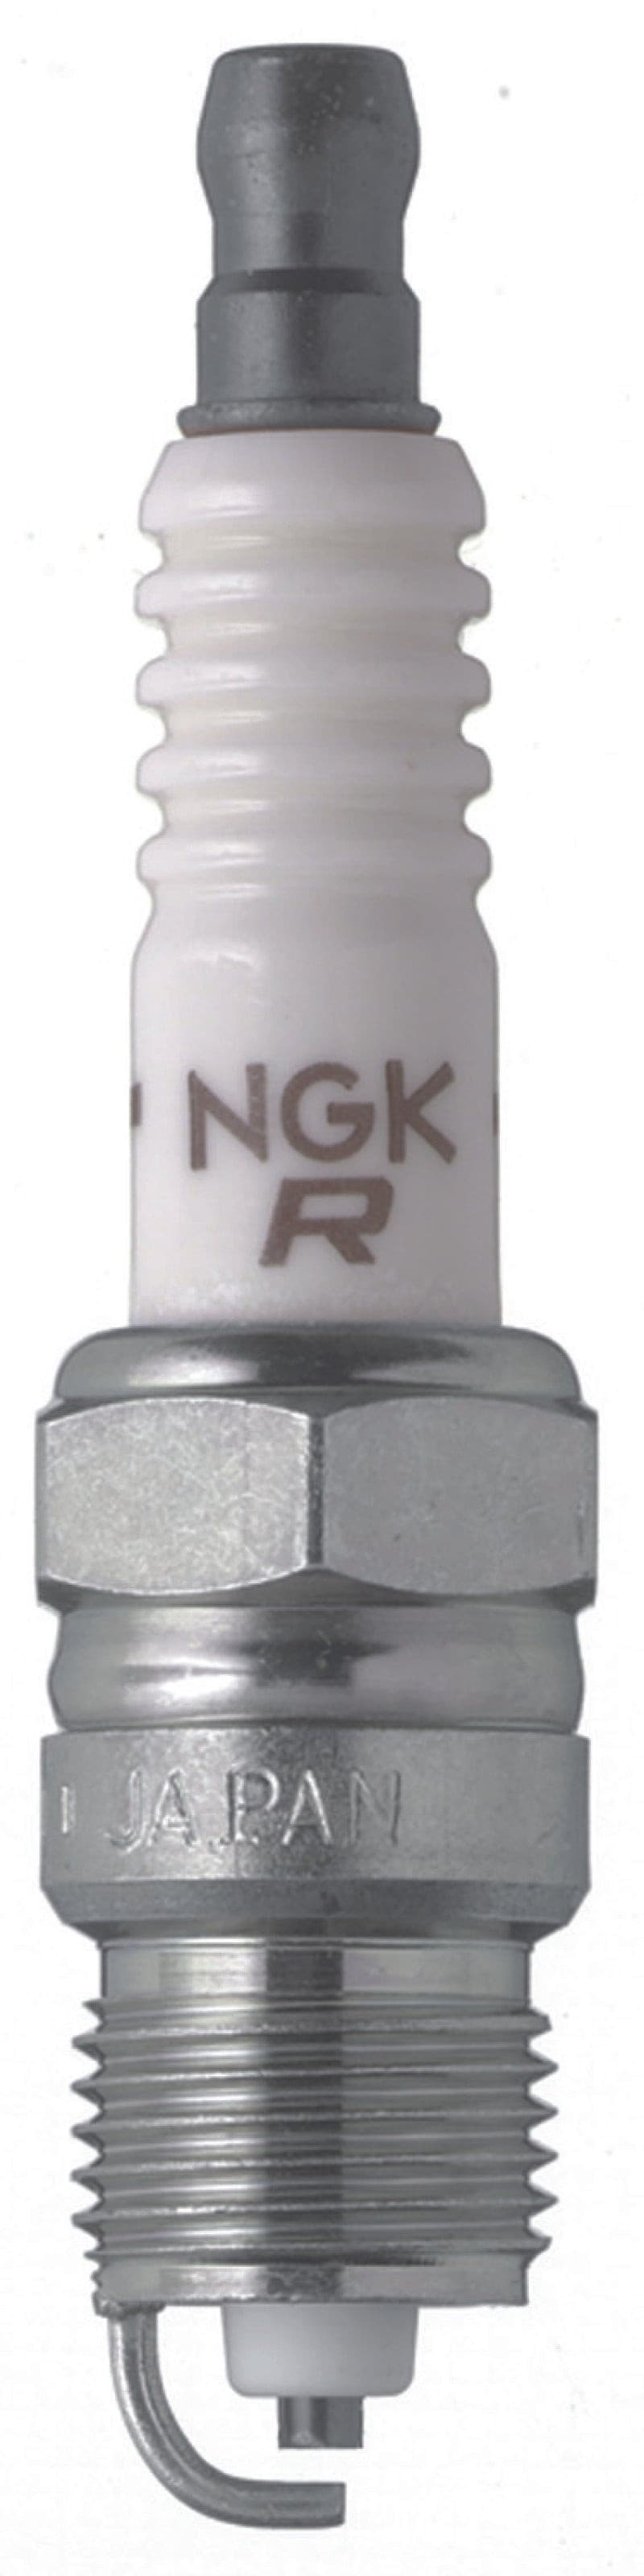 NGK V-Power Spark Plug Box of 4 (UR4).